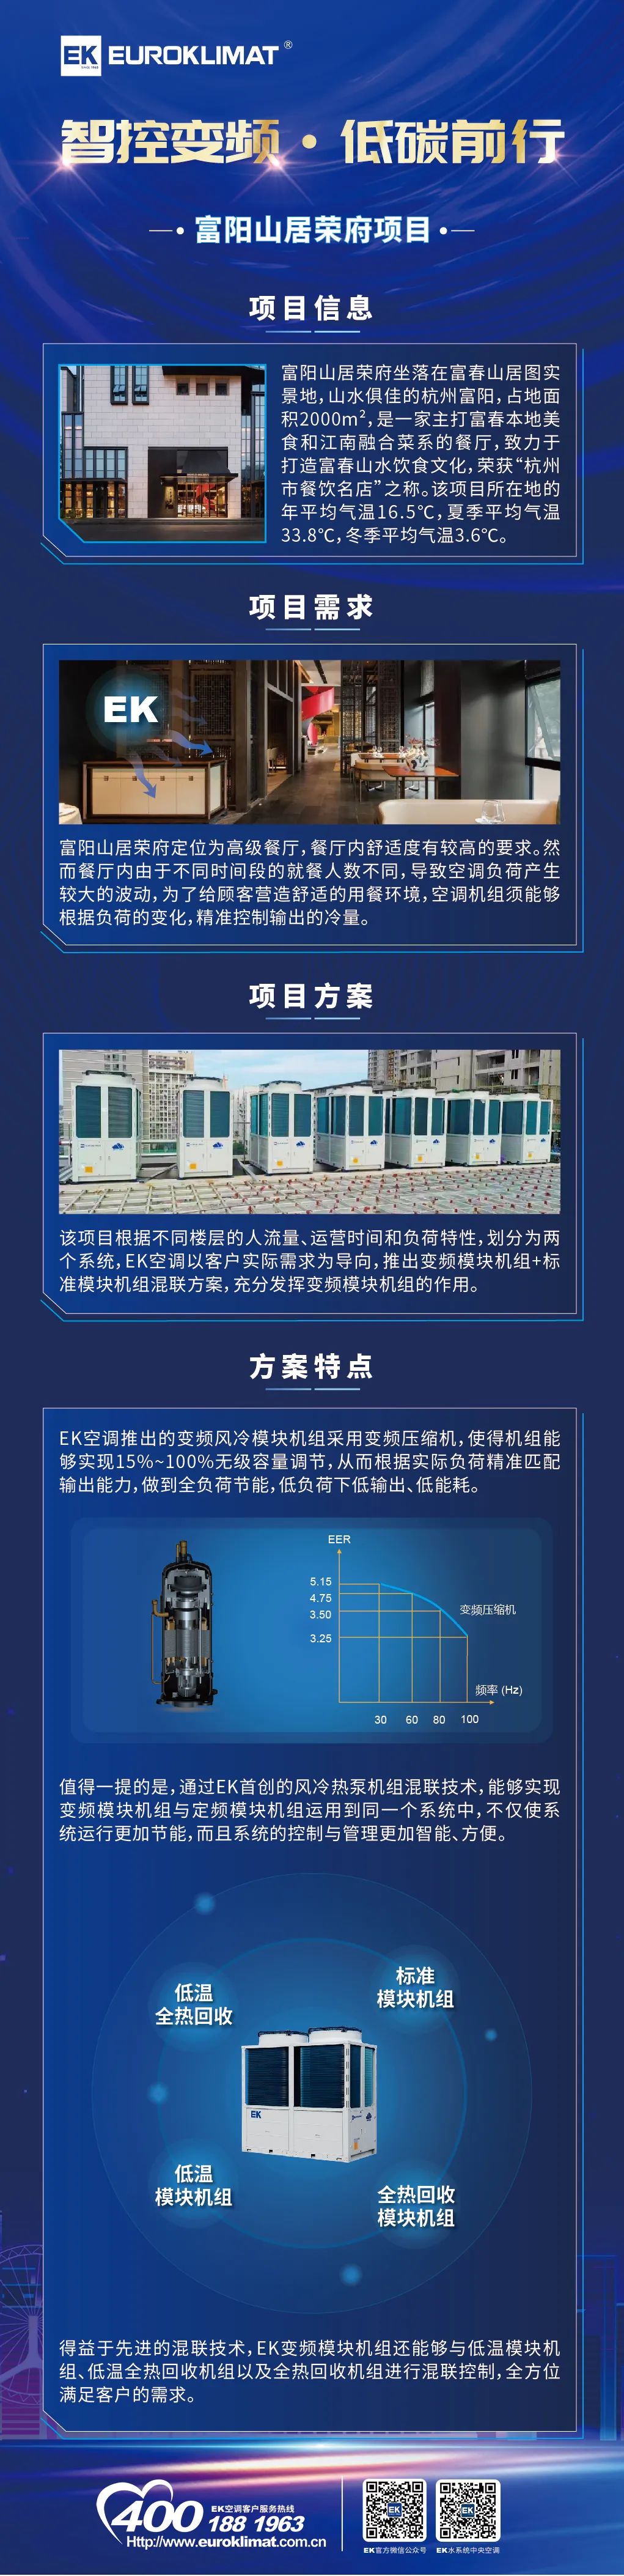 EK变频模块为“杭州市餐饮名店”提供舒适就餐环境